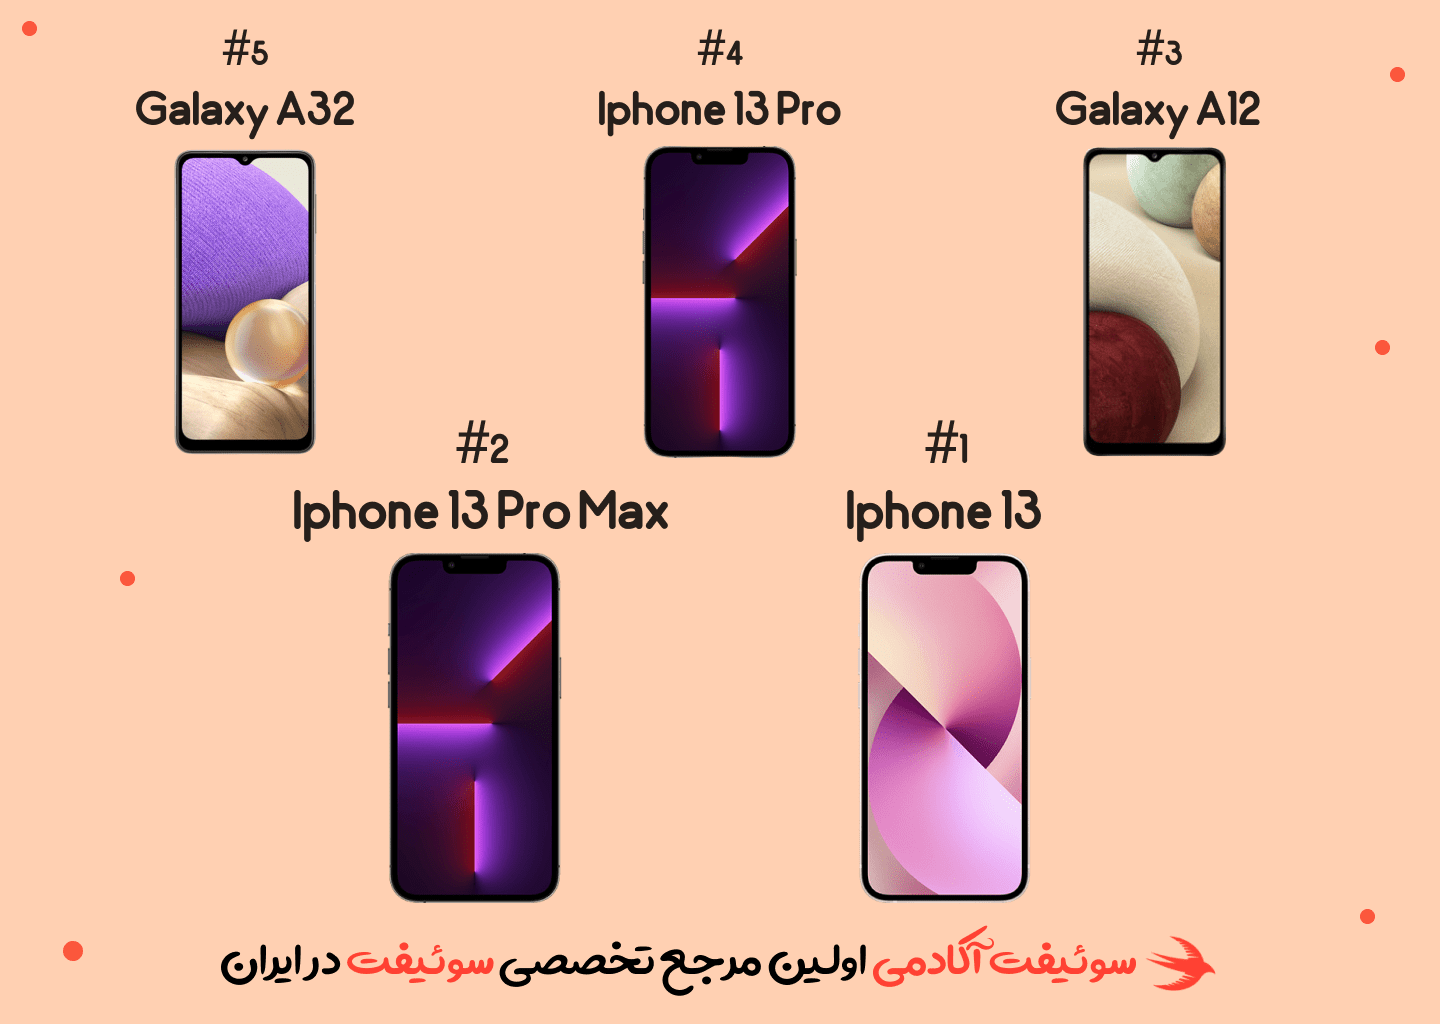 iphone 13,iphone 13 pro,iphone 13 pro max,galaxy a12 و galaxy a32 پر فروش ترین گوشی های 2022 هستند.